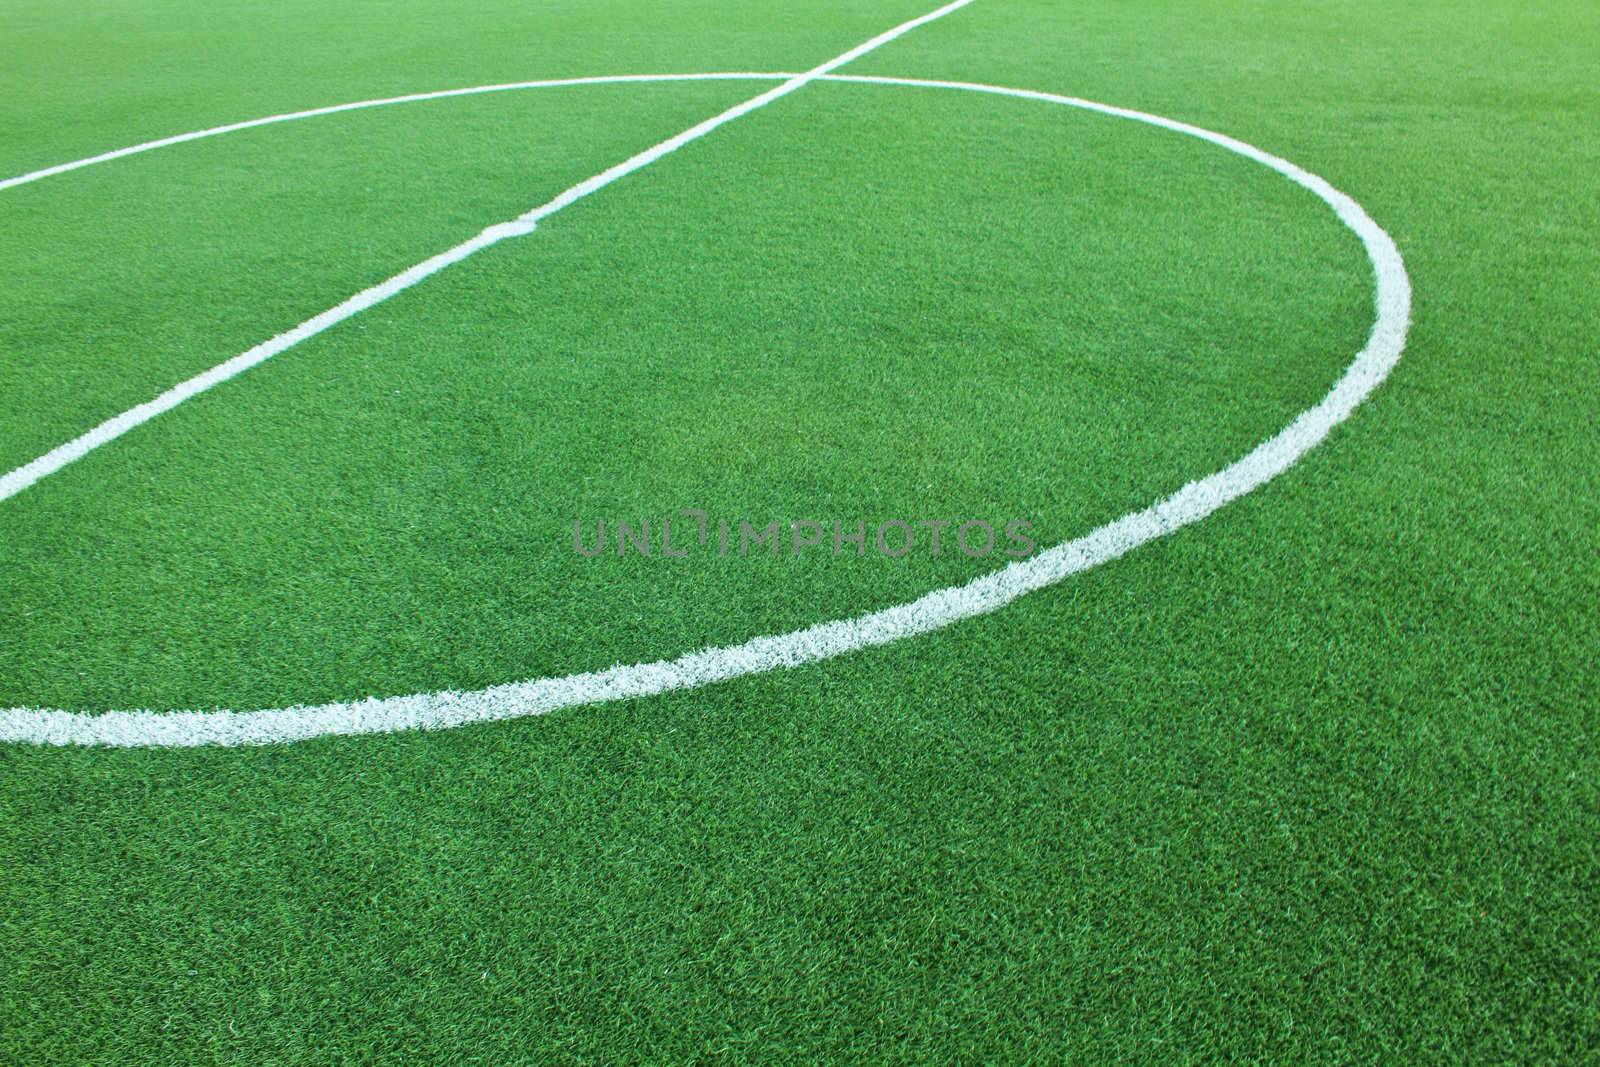 Artificial grass soccer field by rawich06